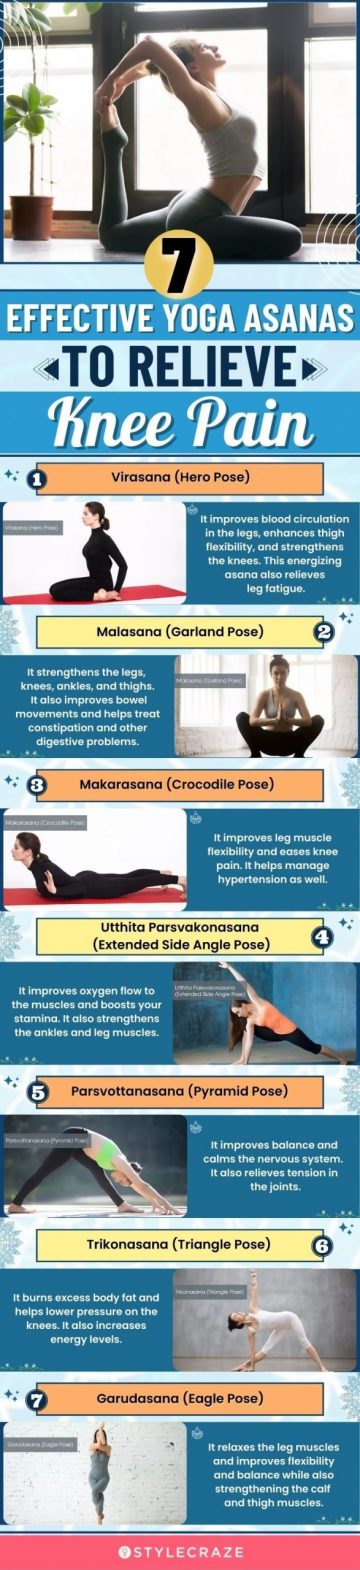 effective yoga asanas to relieve knee pain (infographic)